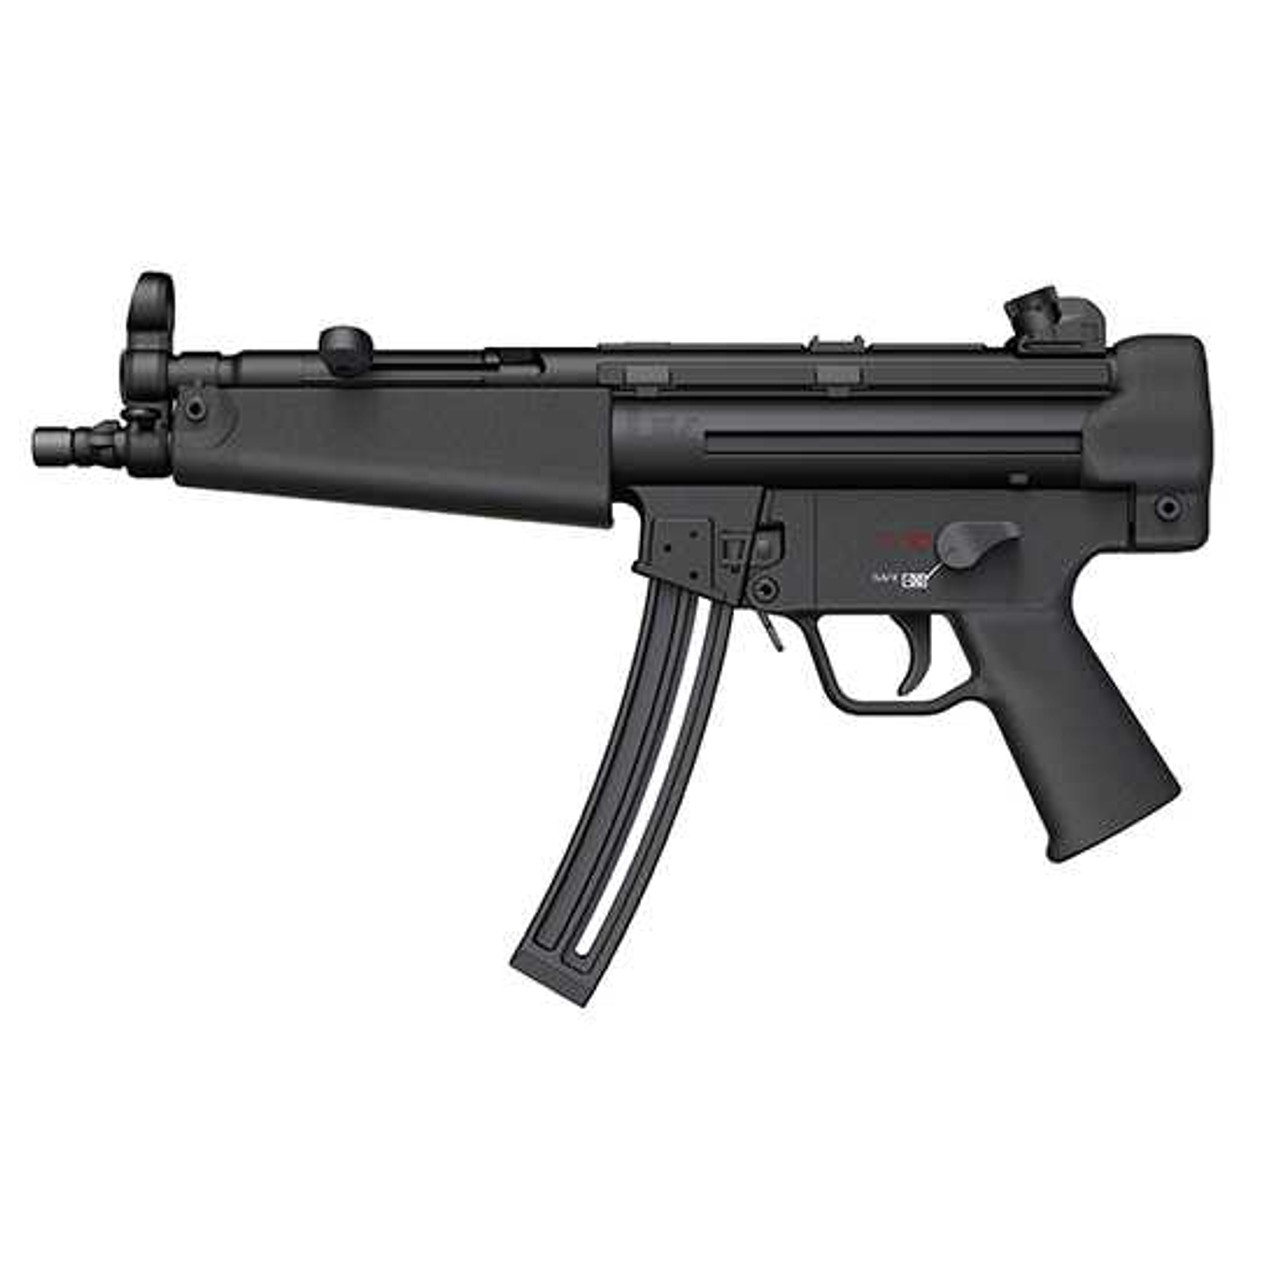 HK MP5 PISTOL 22LR 8.5 1 10RD